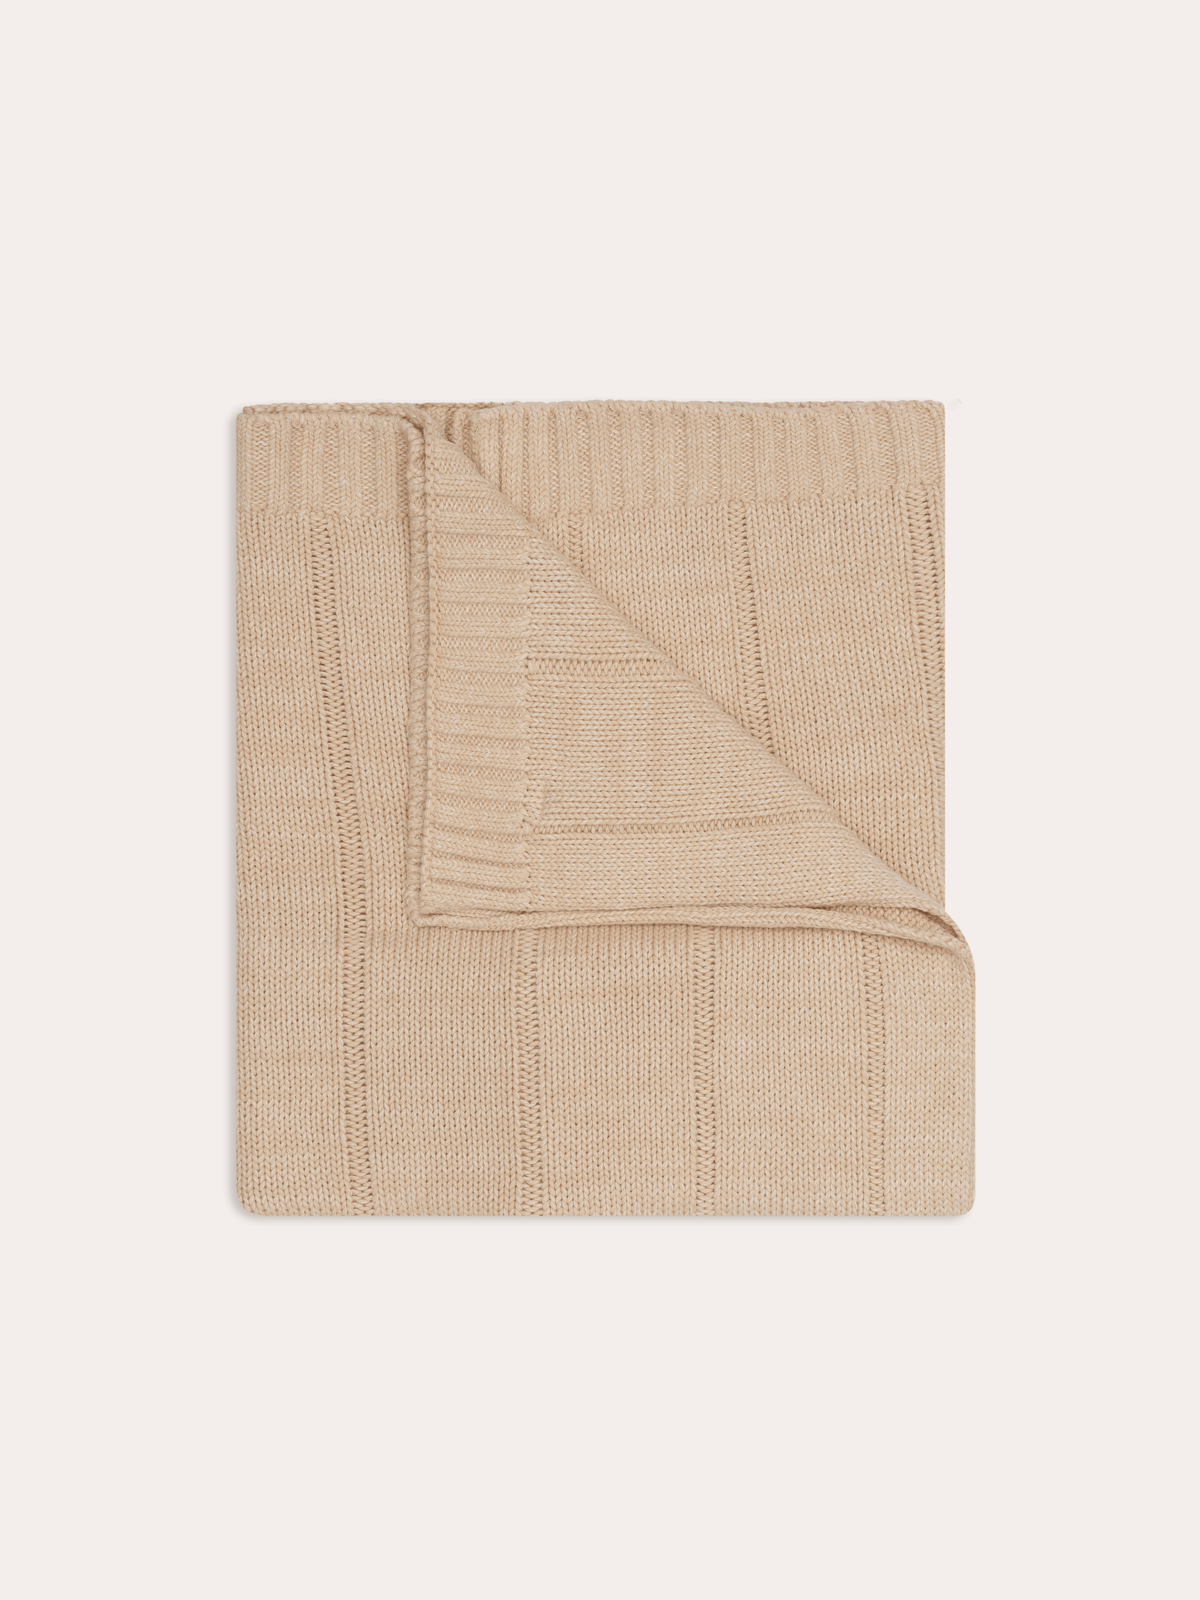 Knit Baby Blanket - Sand - Child Boutique